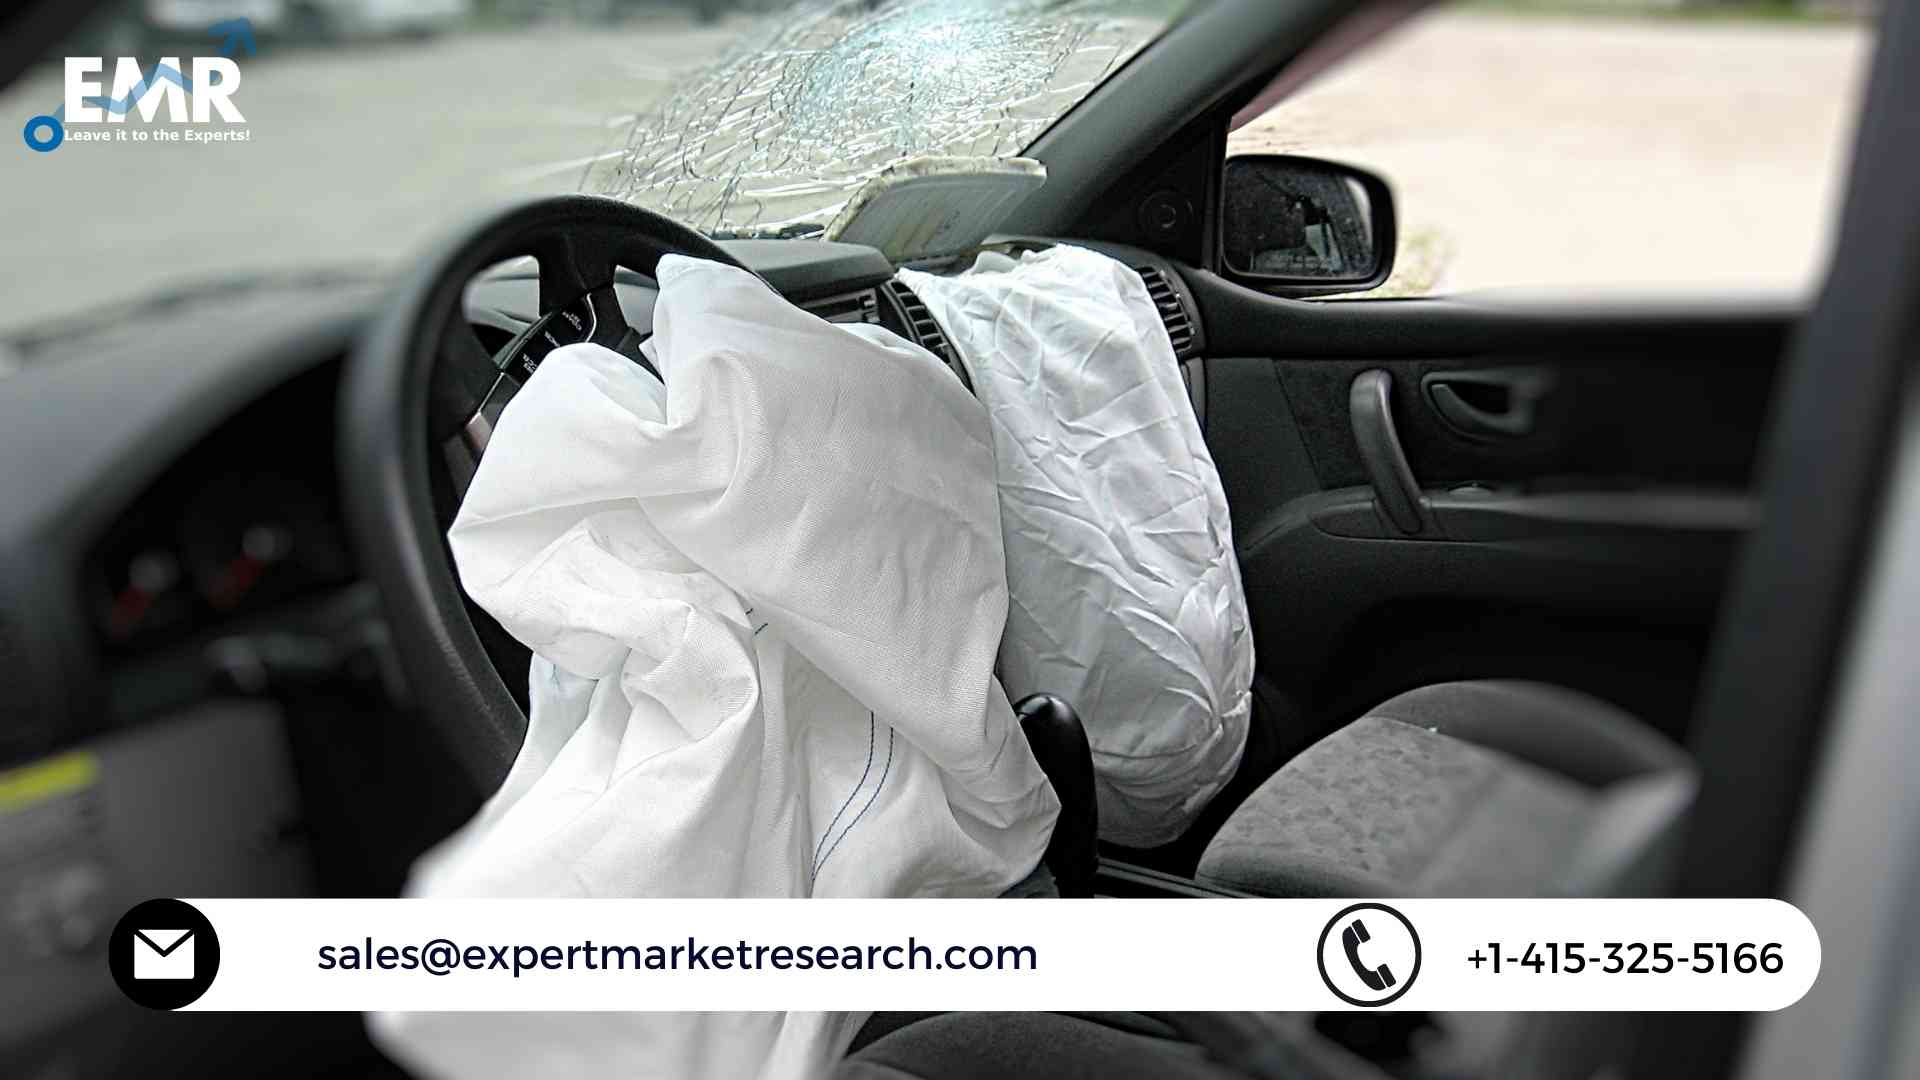 Automotive Airbags Market